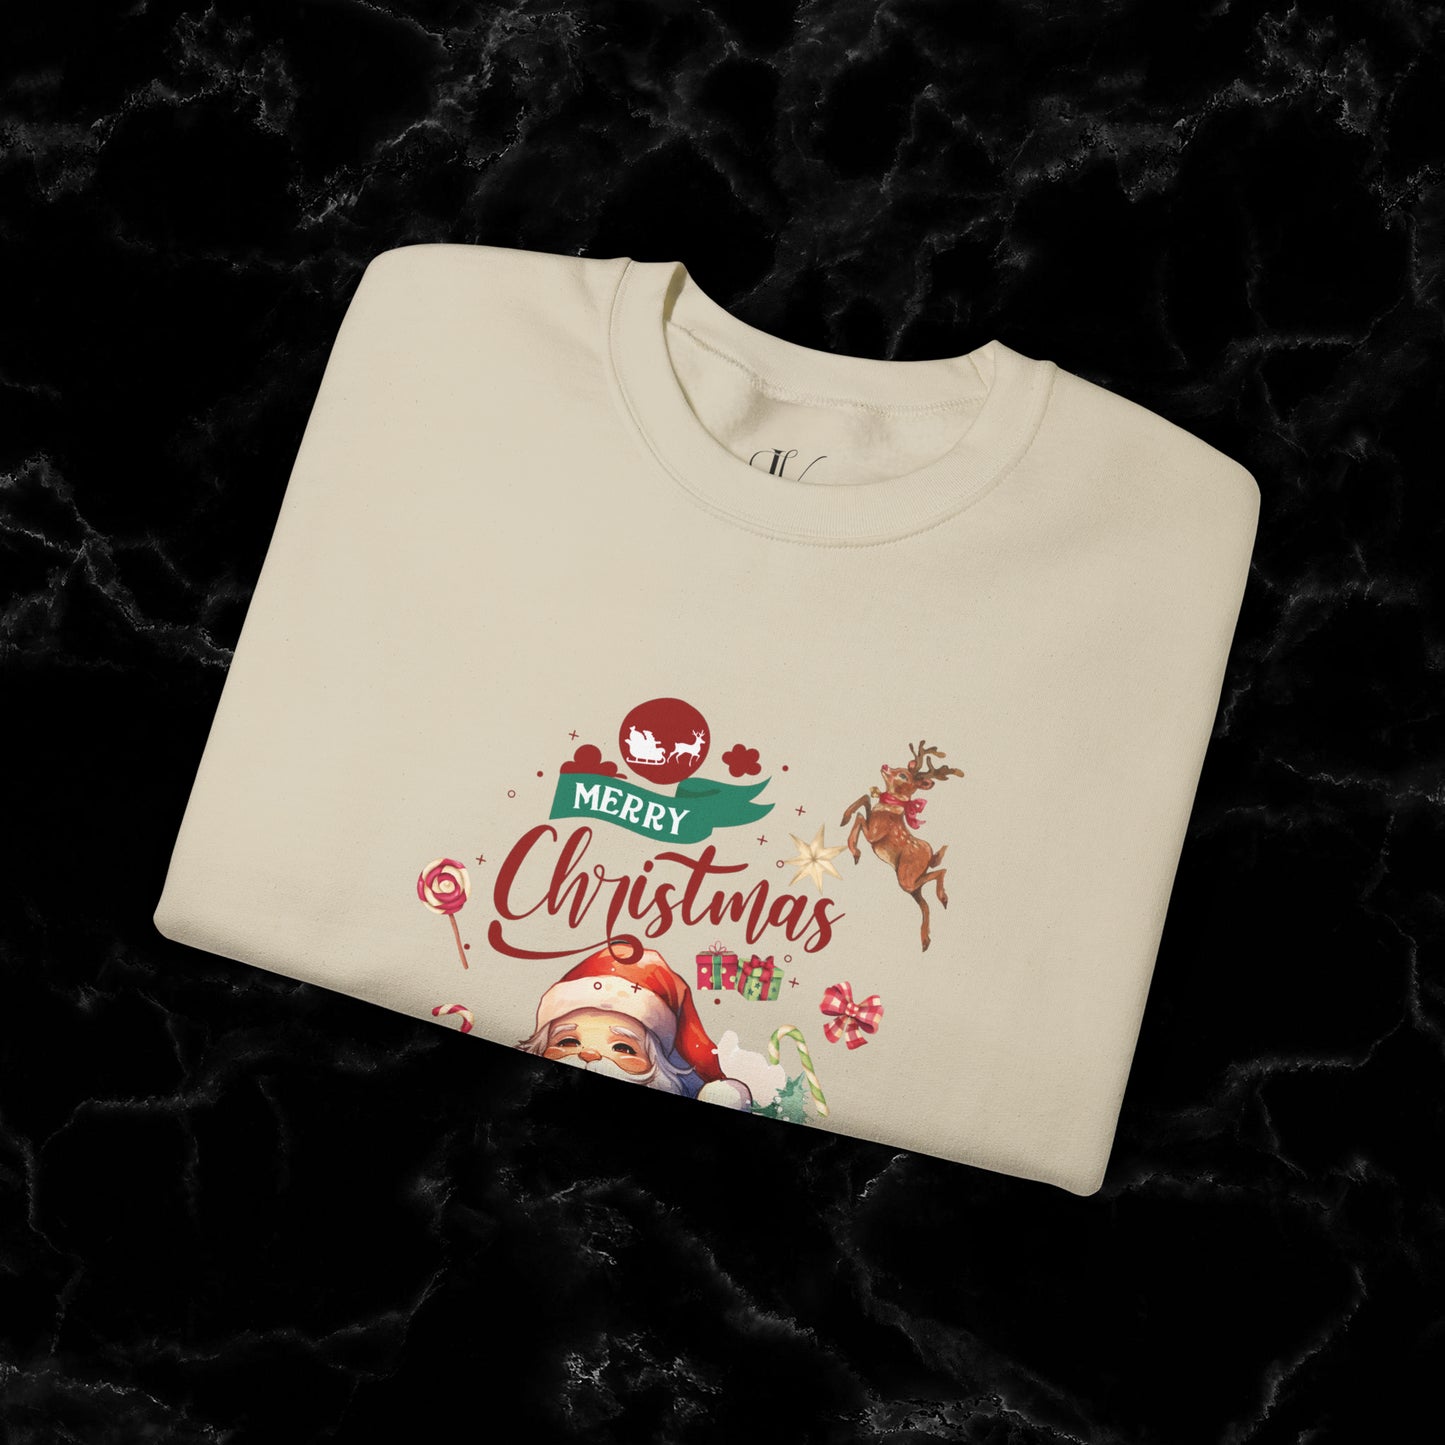 Merry Christmas Sweatshirt | Christmas Shirt - Matching Christmas Shirt - Santa Claus Merry Christmas Sweatshirt - Holiday Gift - Christmas Gift Sweatshirt   